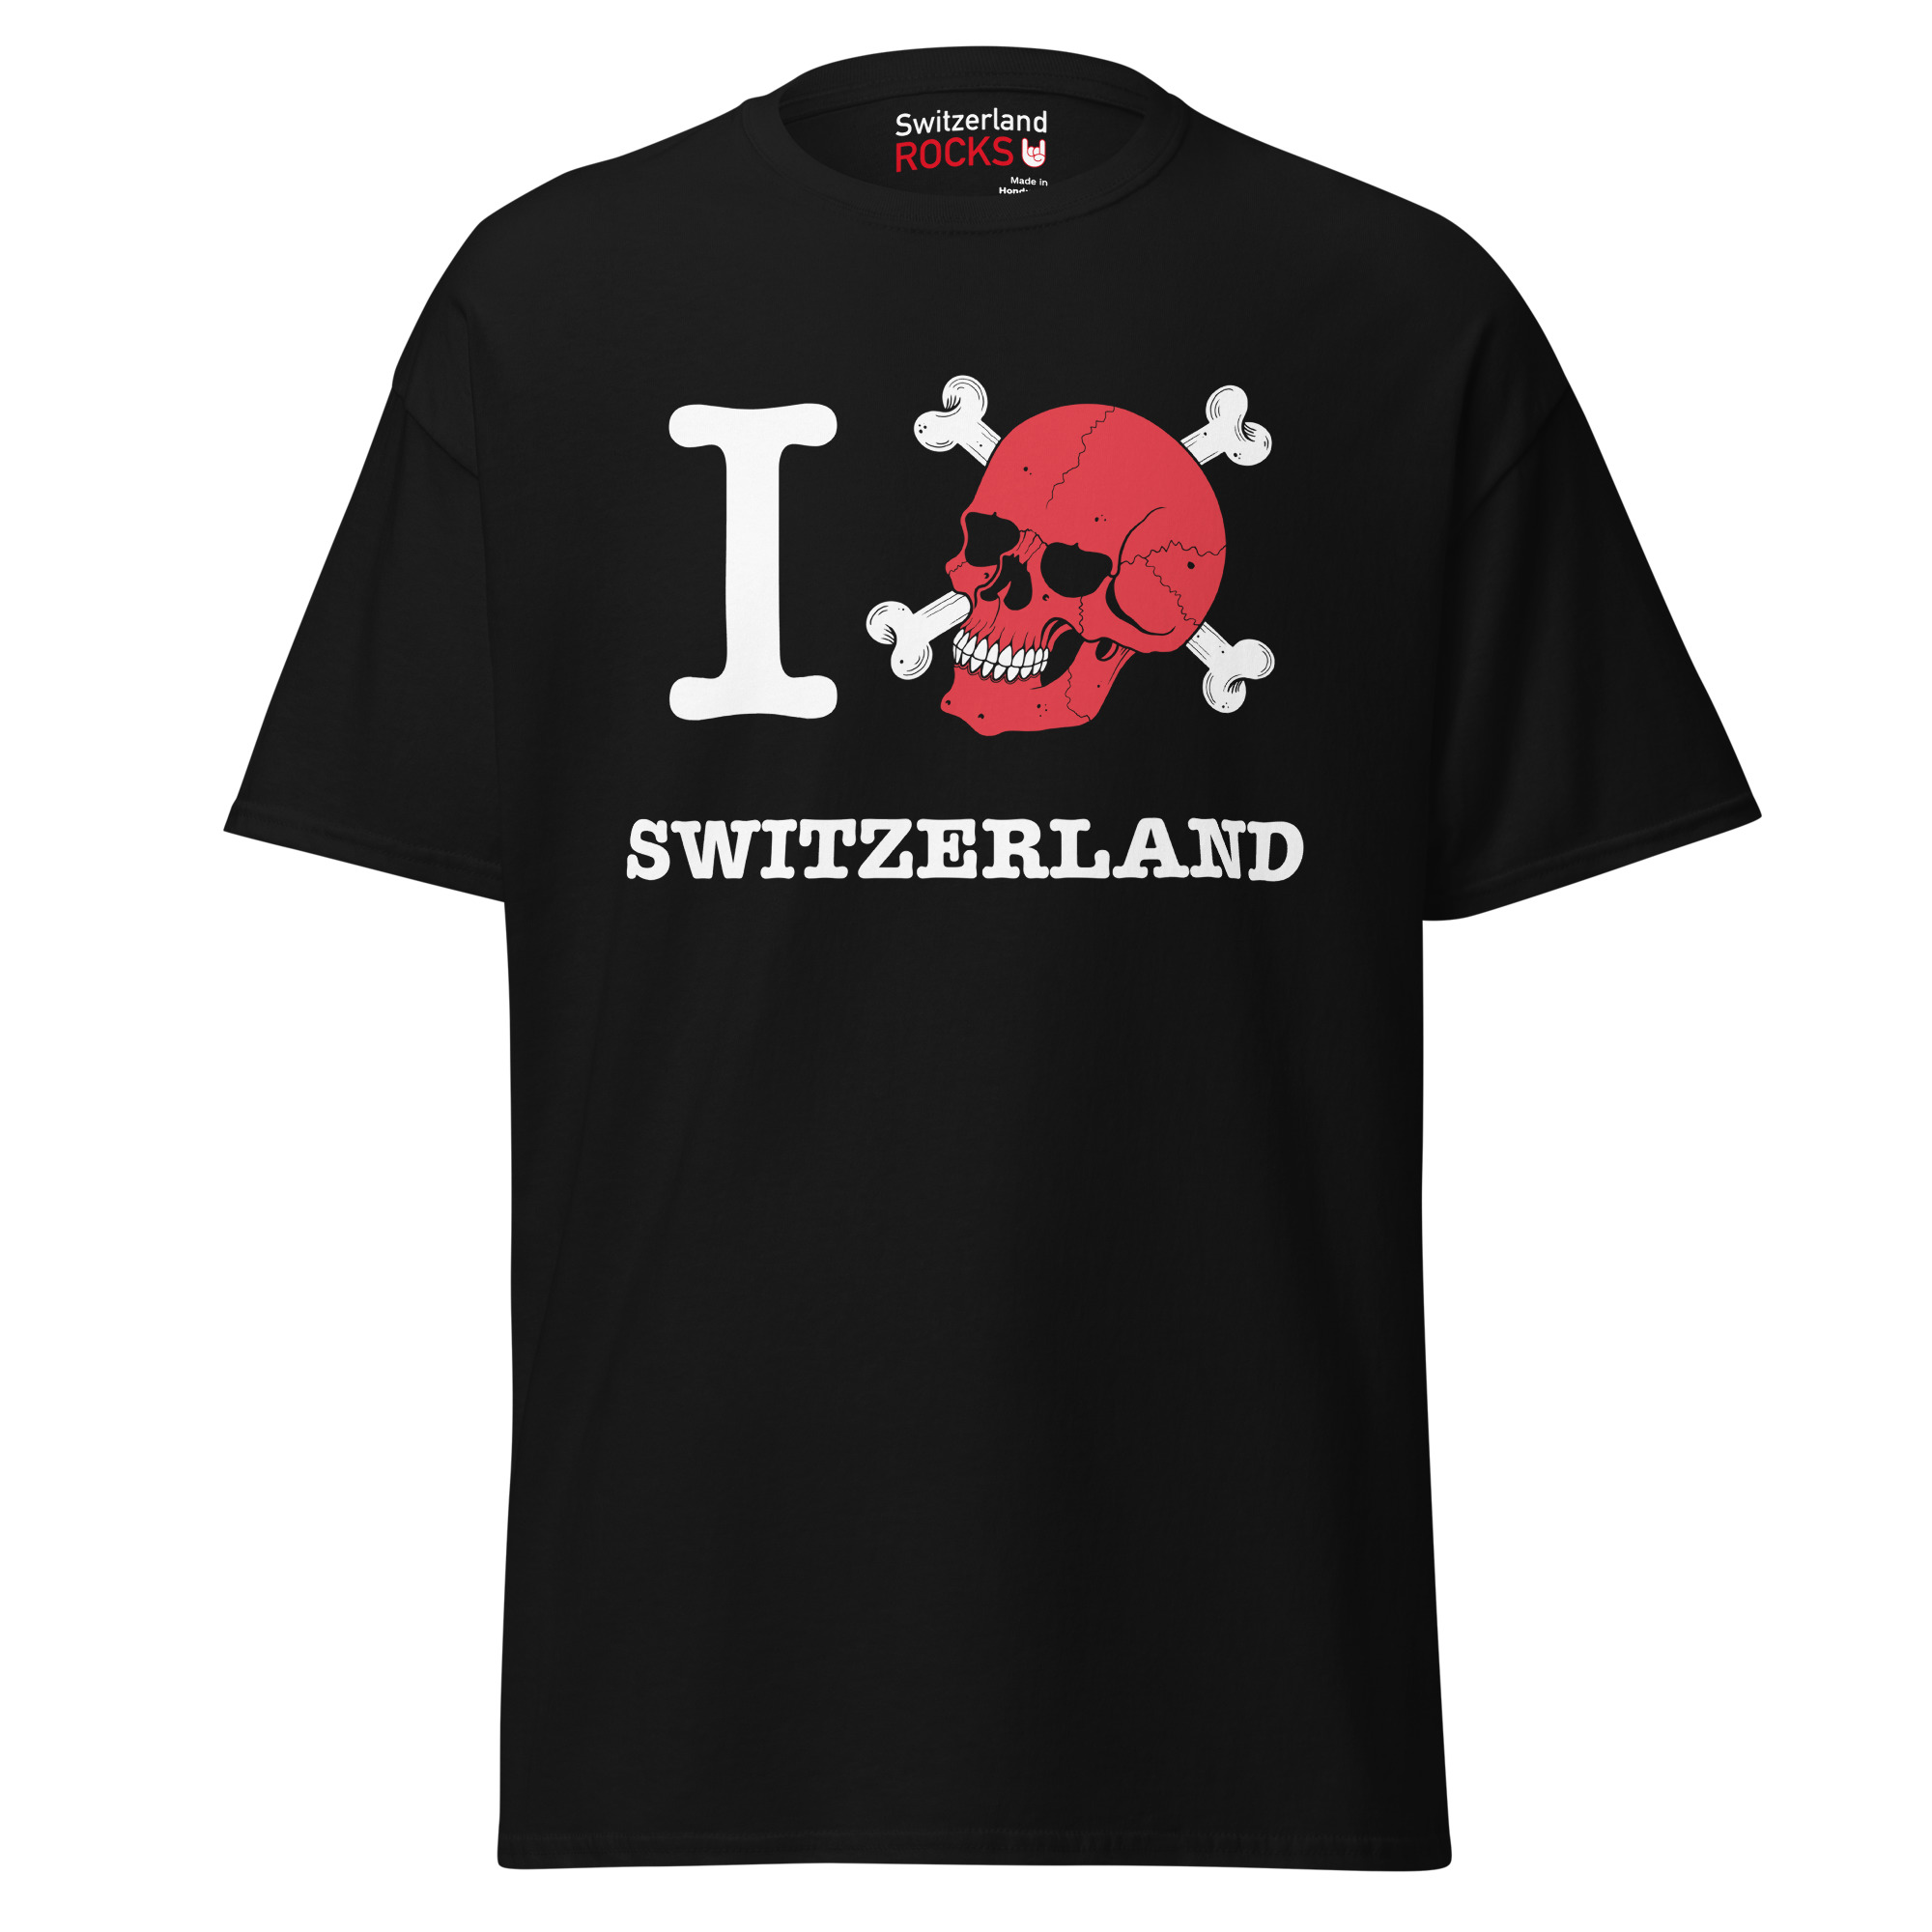 T-shirt blanc – Switzerland Rocks T-Shirts Wearyt